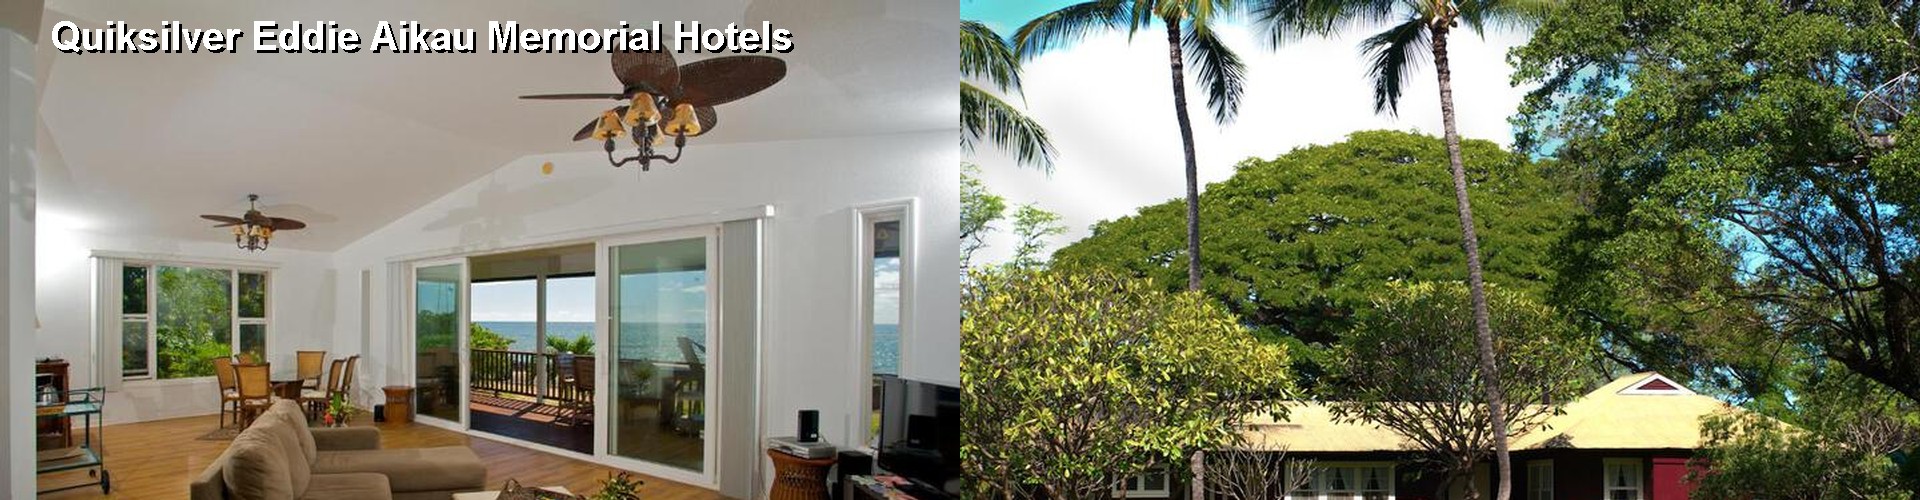 5 Best Hotels near Quiksilver Eddie Aikau Memorial